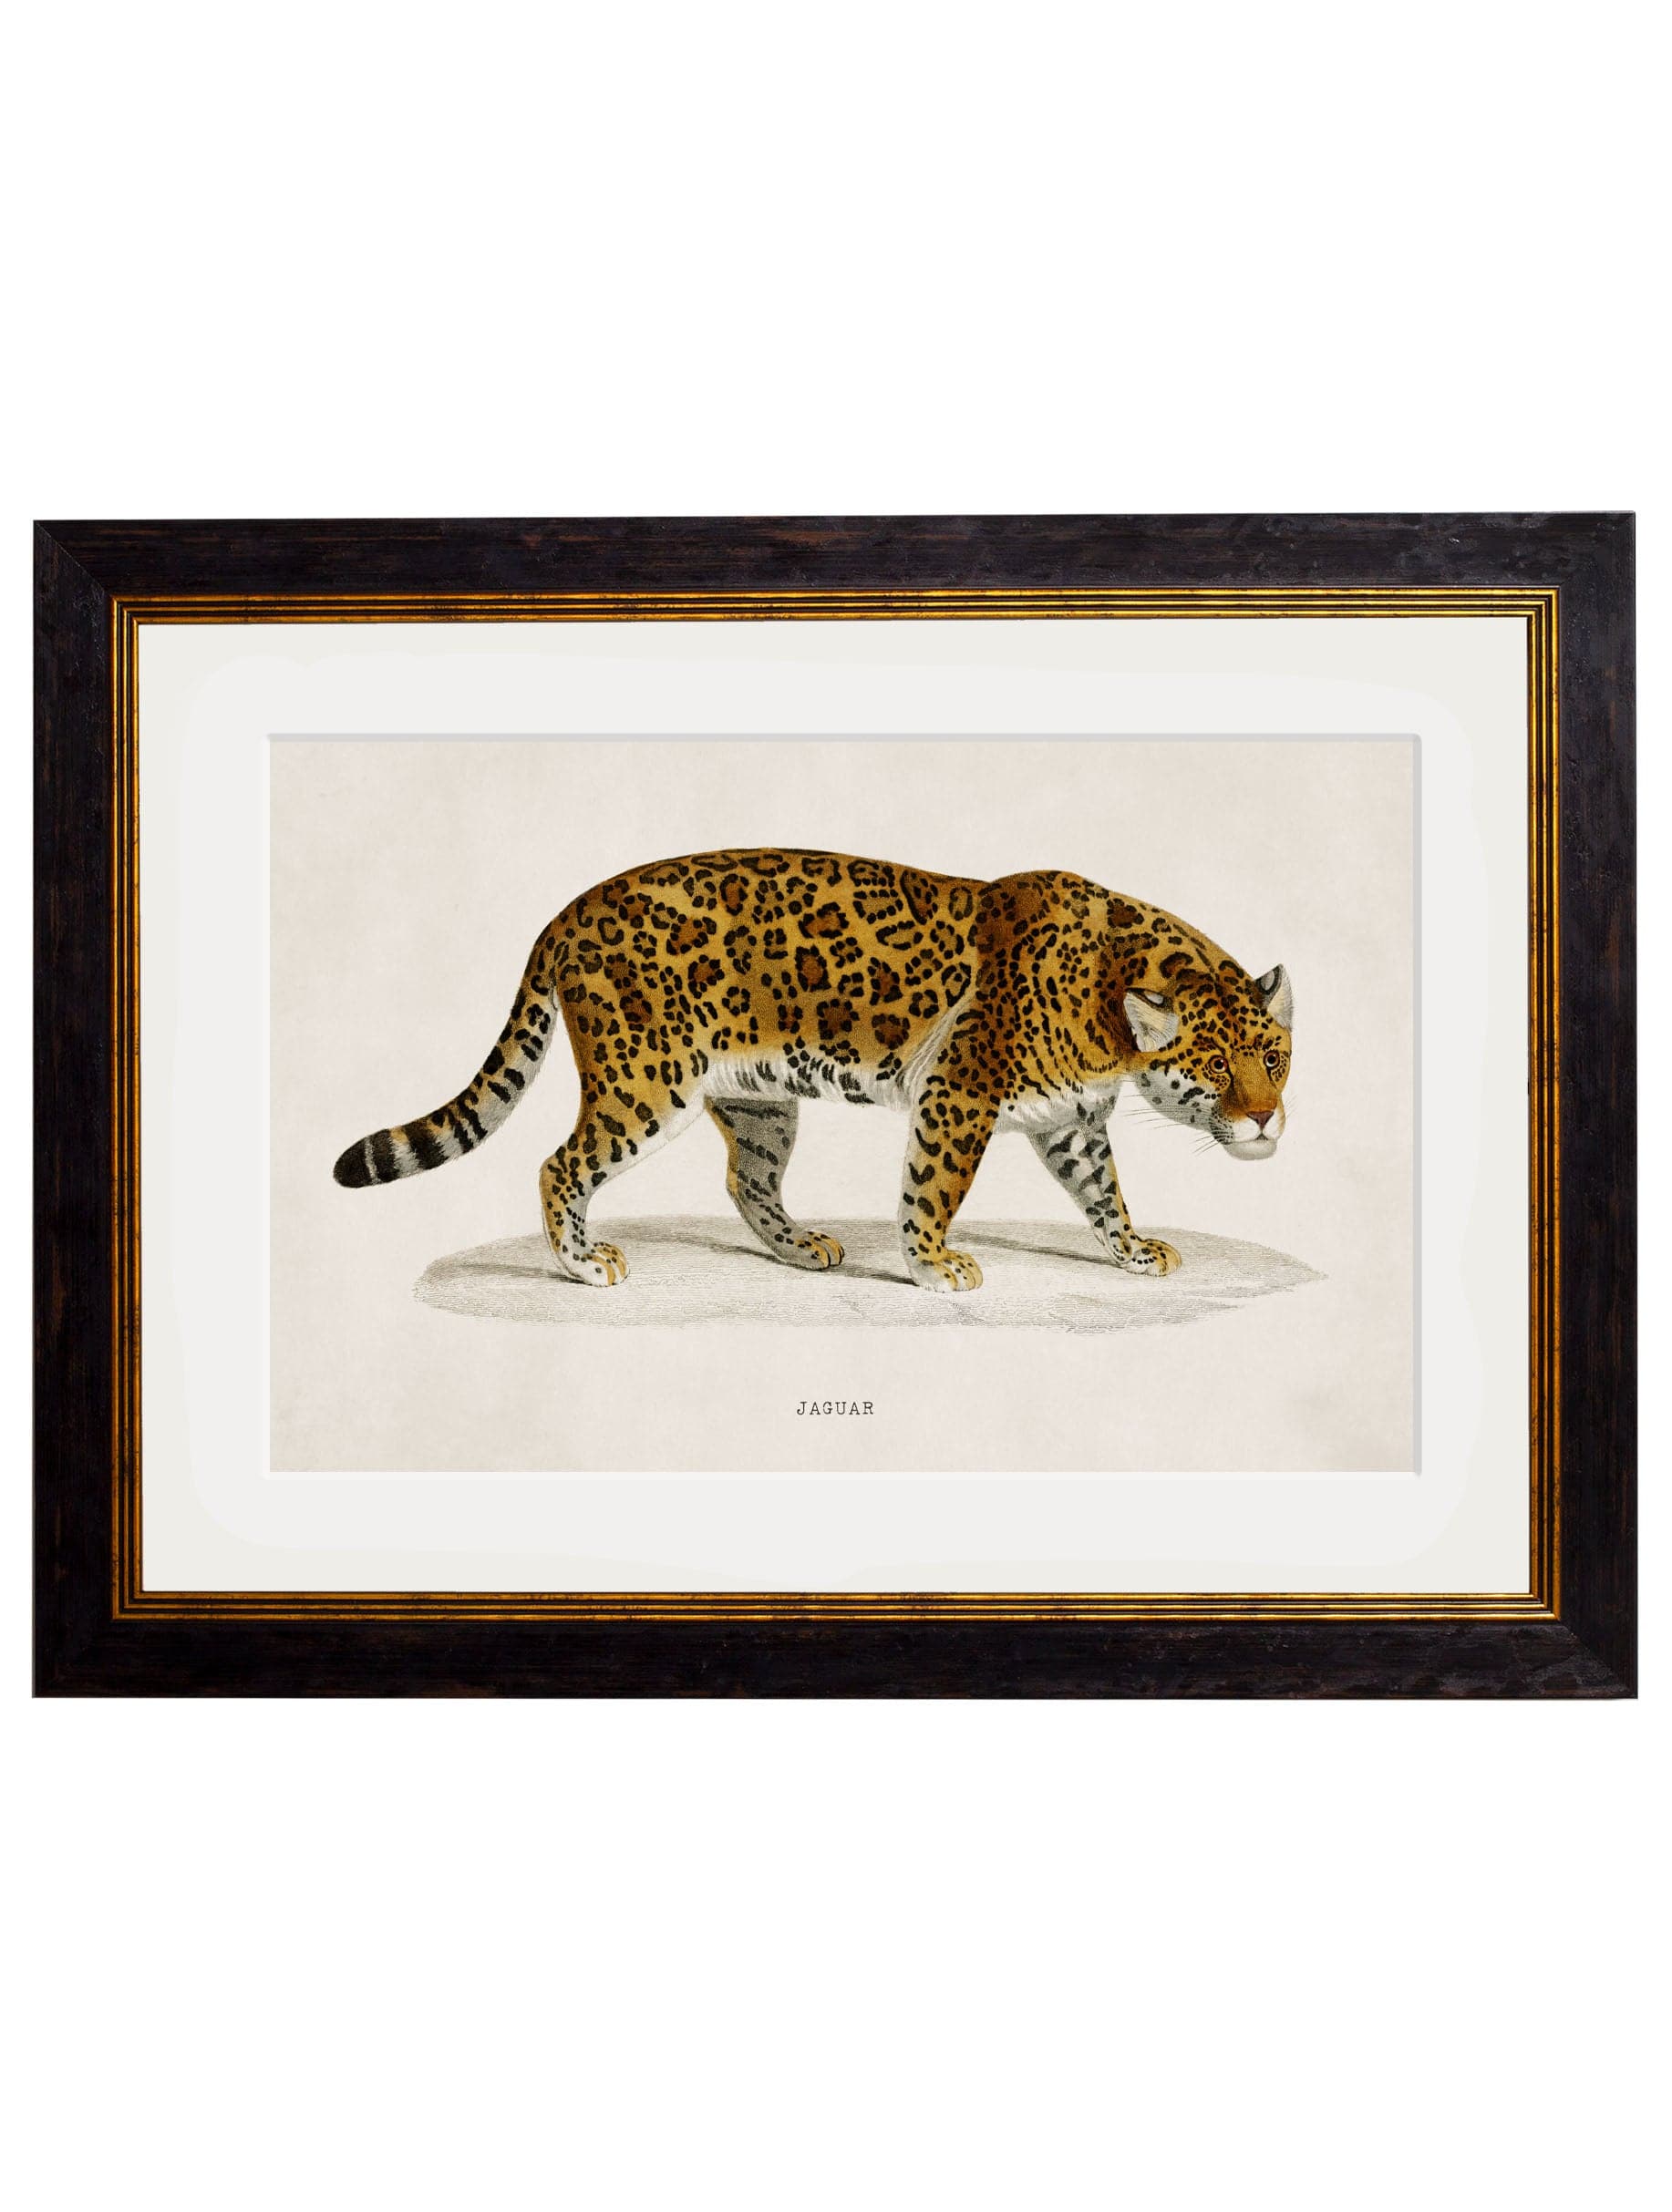 C.1836 Jaguar for sale - Woodcock and Cavendish